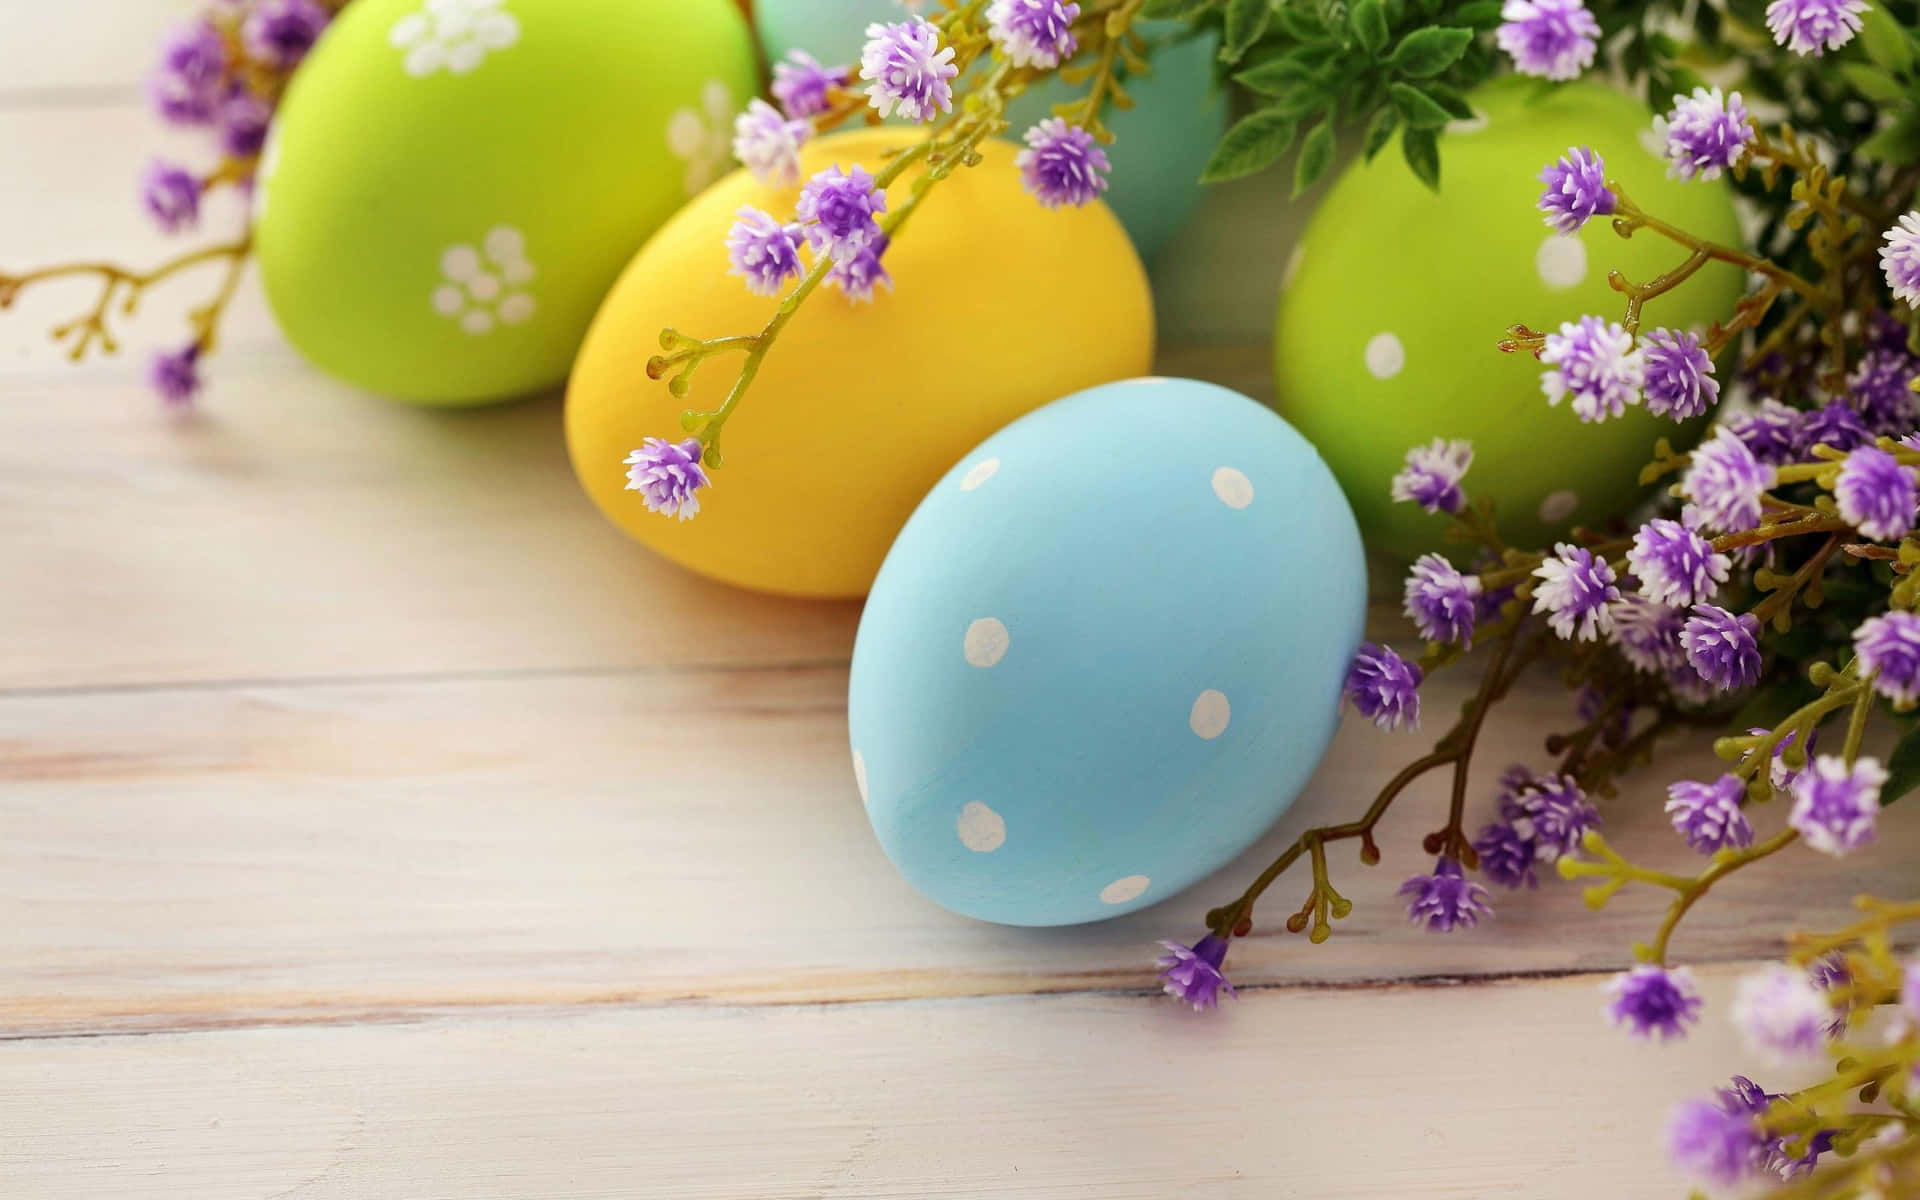 Vibrant pastel colors create a whimsical Easter celebration.